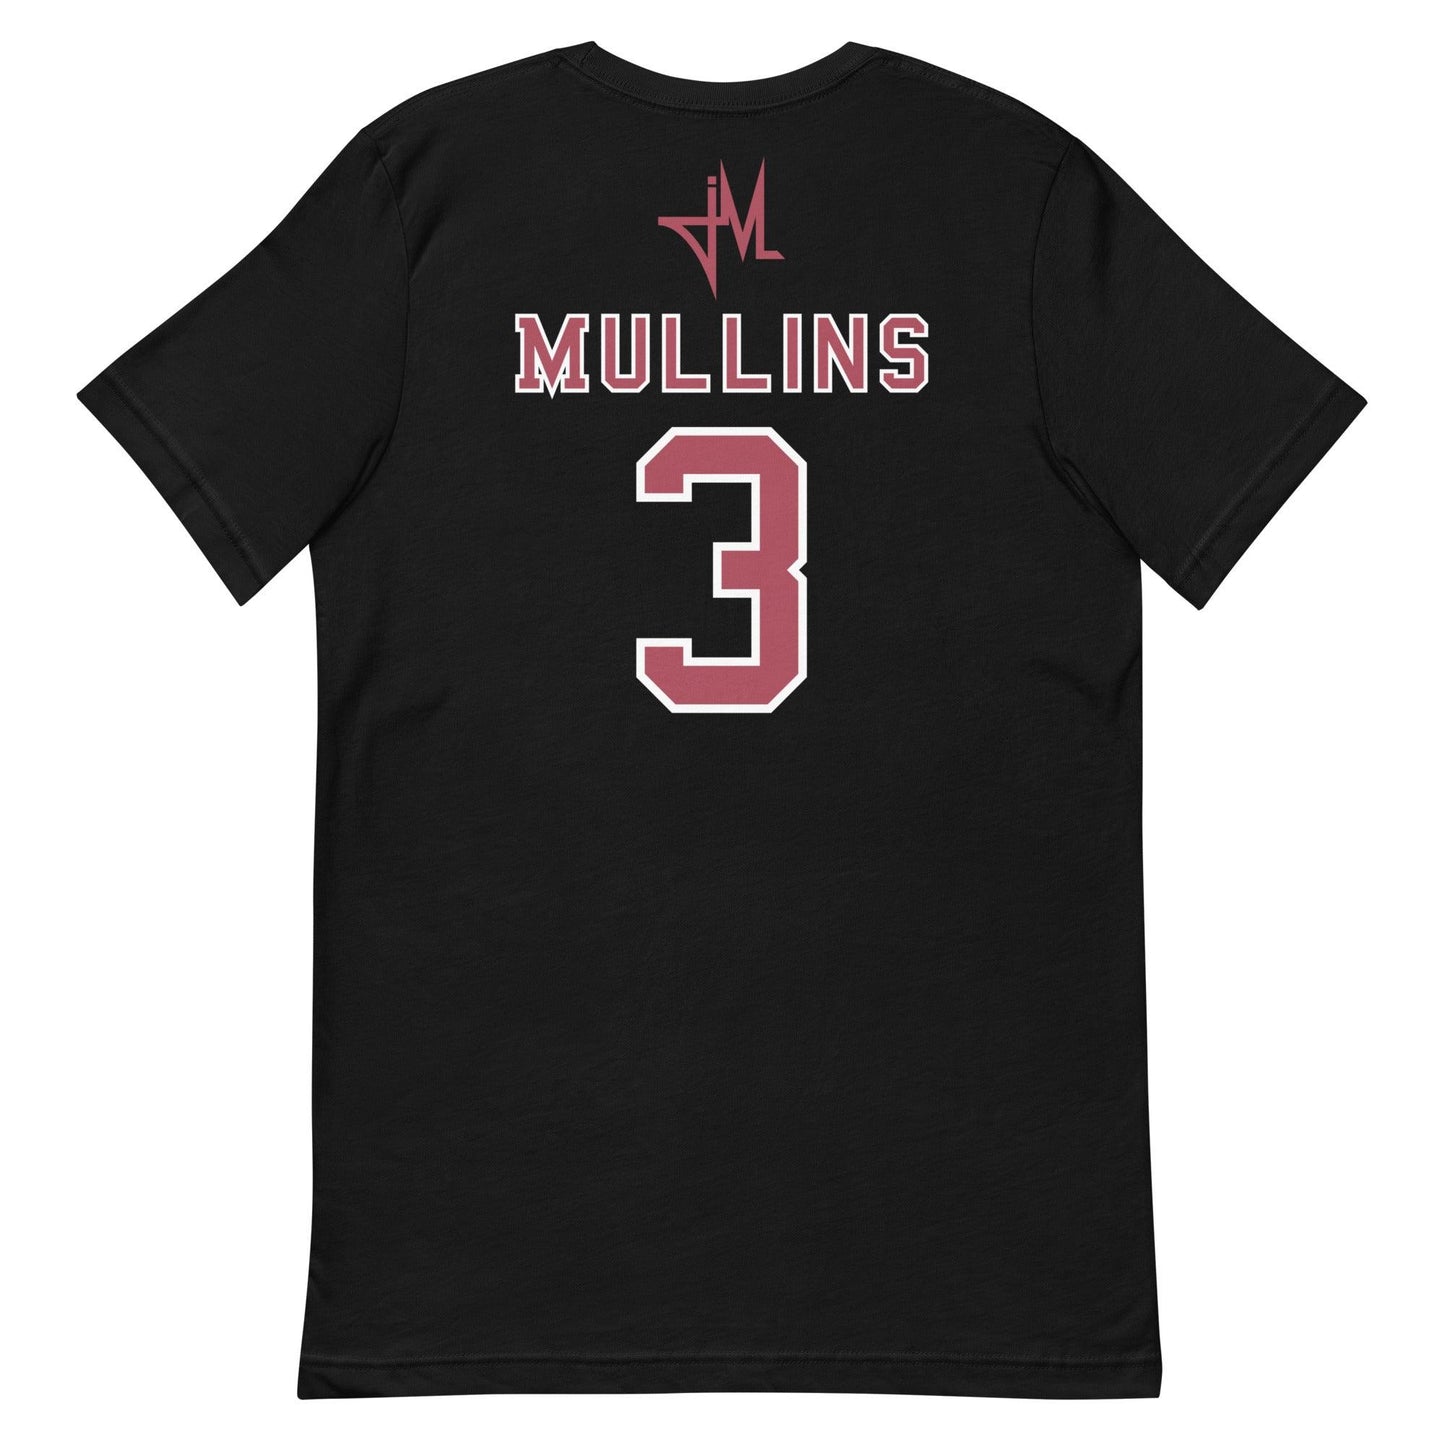 Jabe Mullins "Jersey" t-shirt - Fan Arch